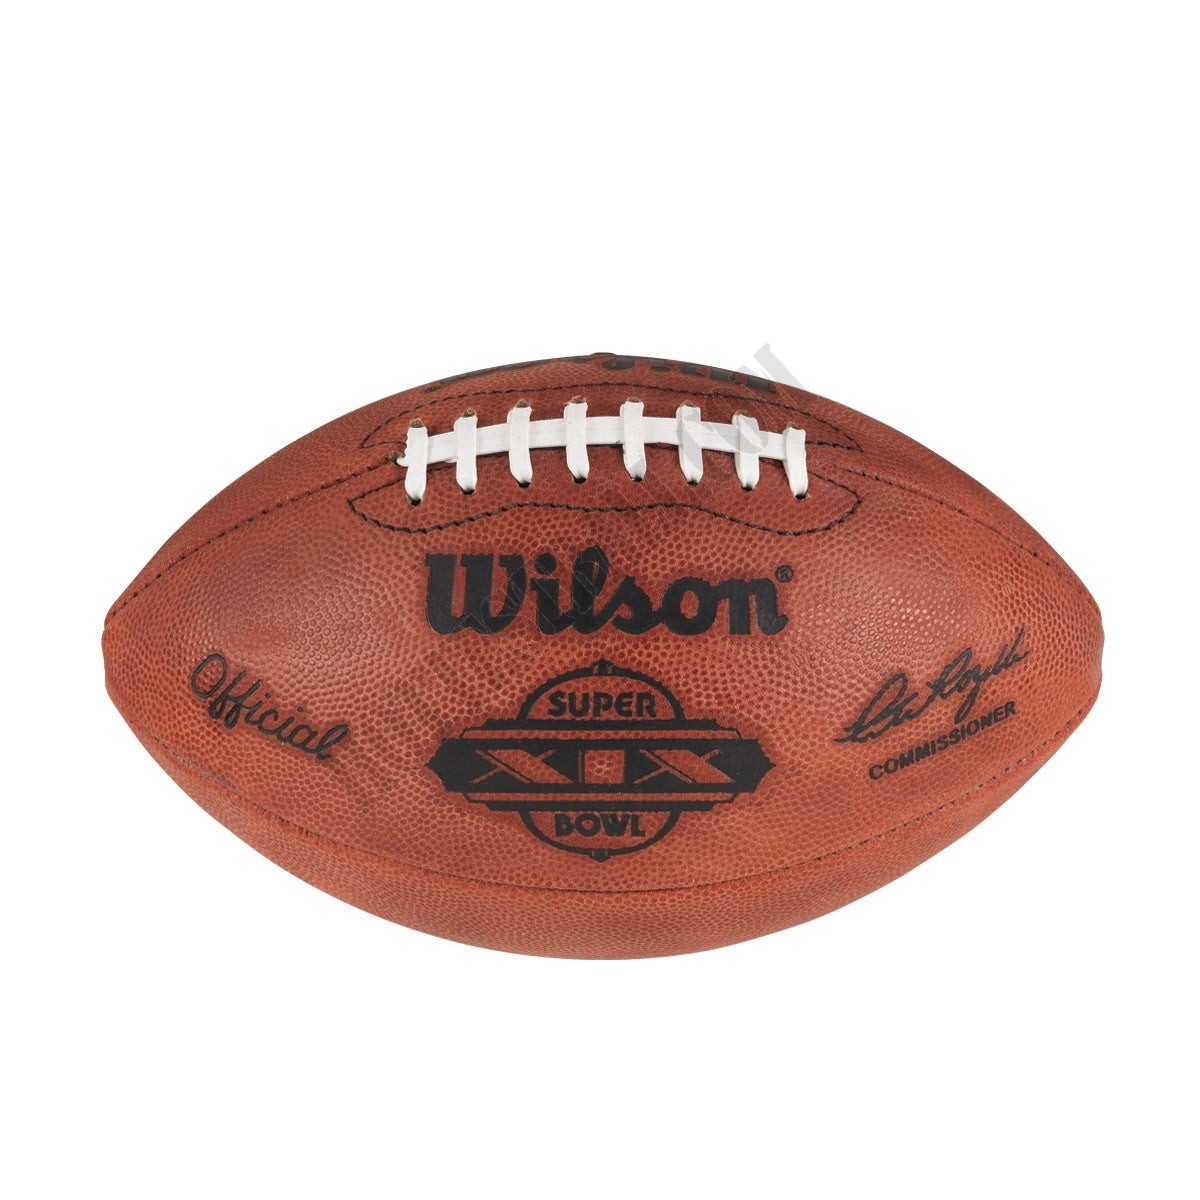 Super Bowl XIX Game Football - San Francisco 49ers ● Wilson Promotions - -0